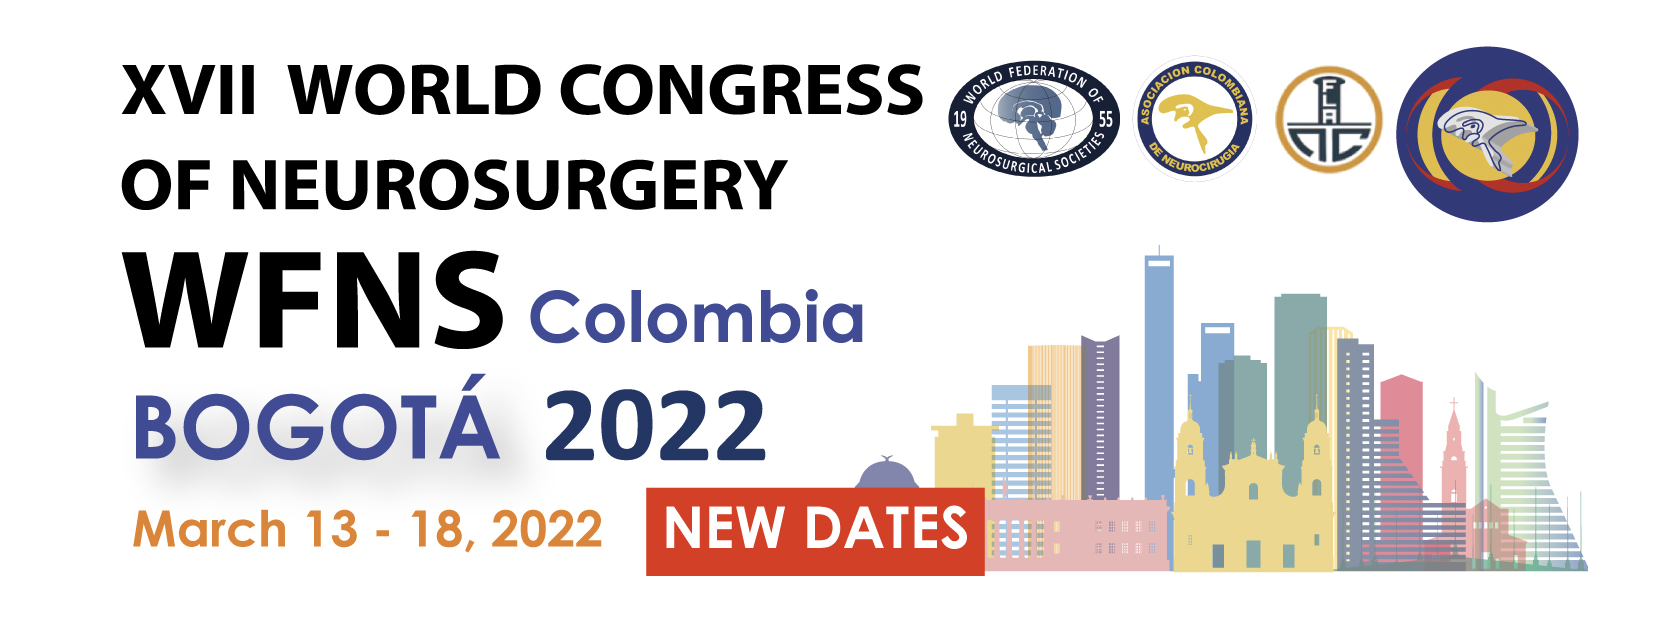 XVII World congress of neurosurgery